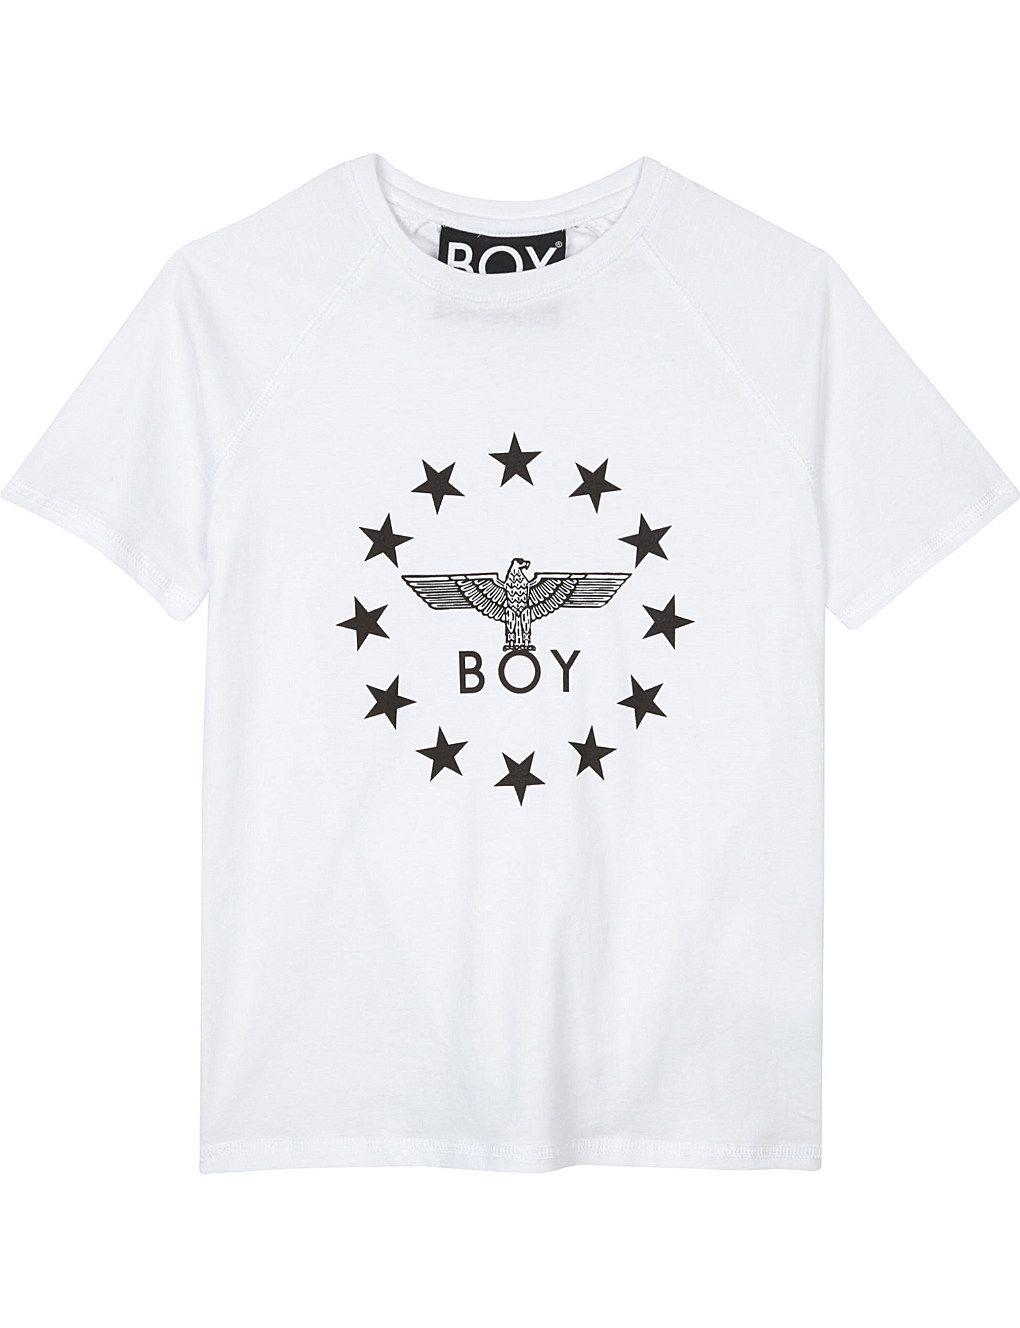 Boy Looking at Star Logo - BOY LONDON Star Logo Cotton T Shirt 3 12 Years